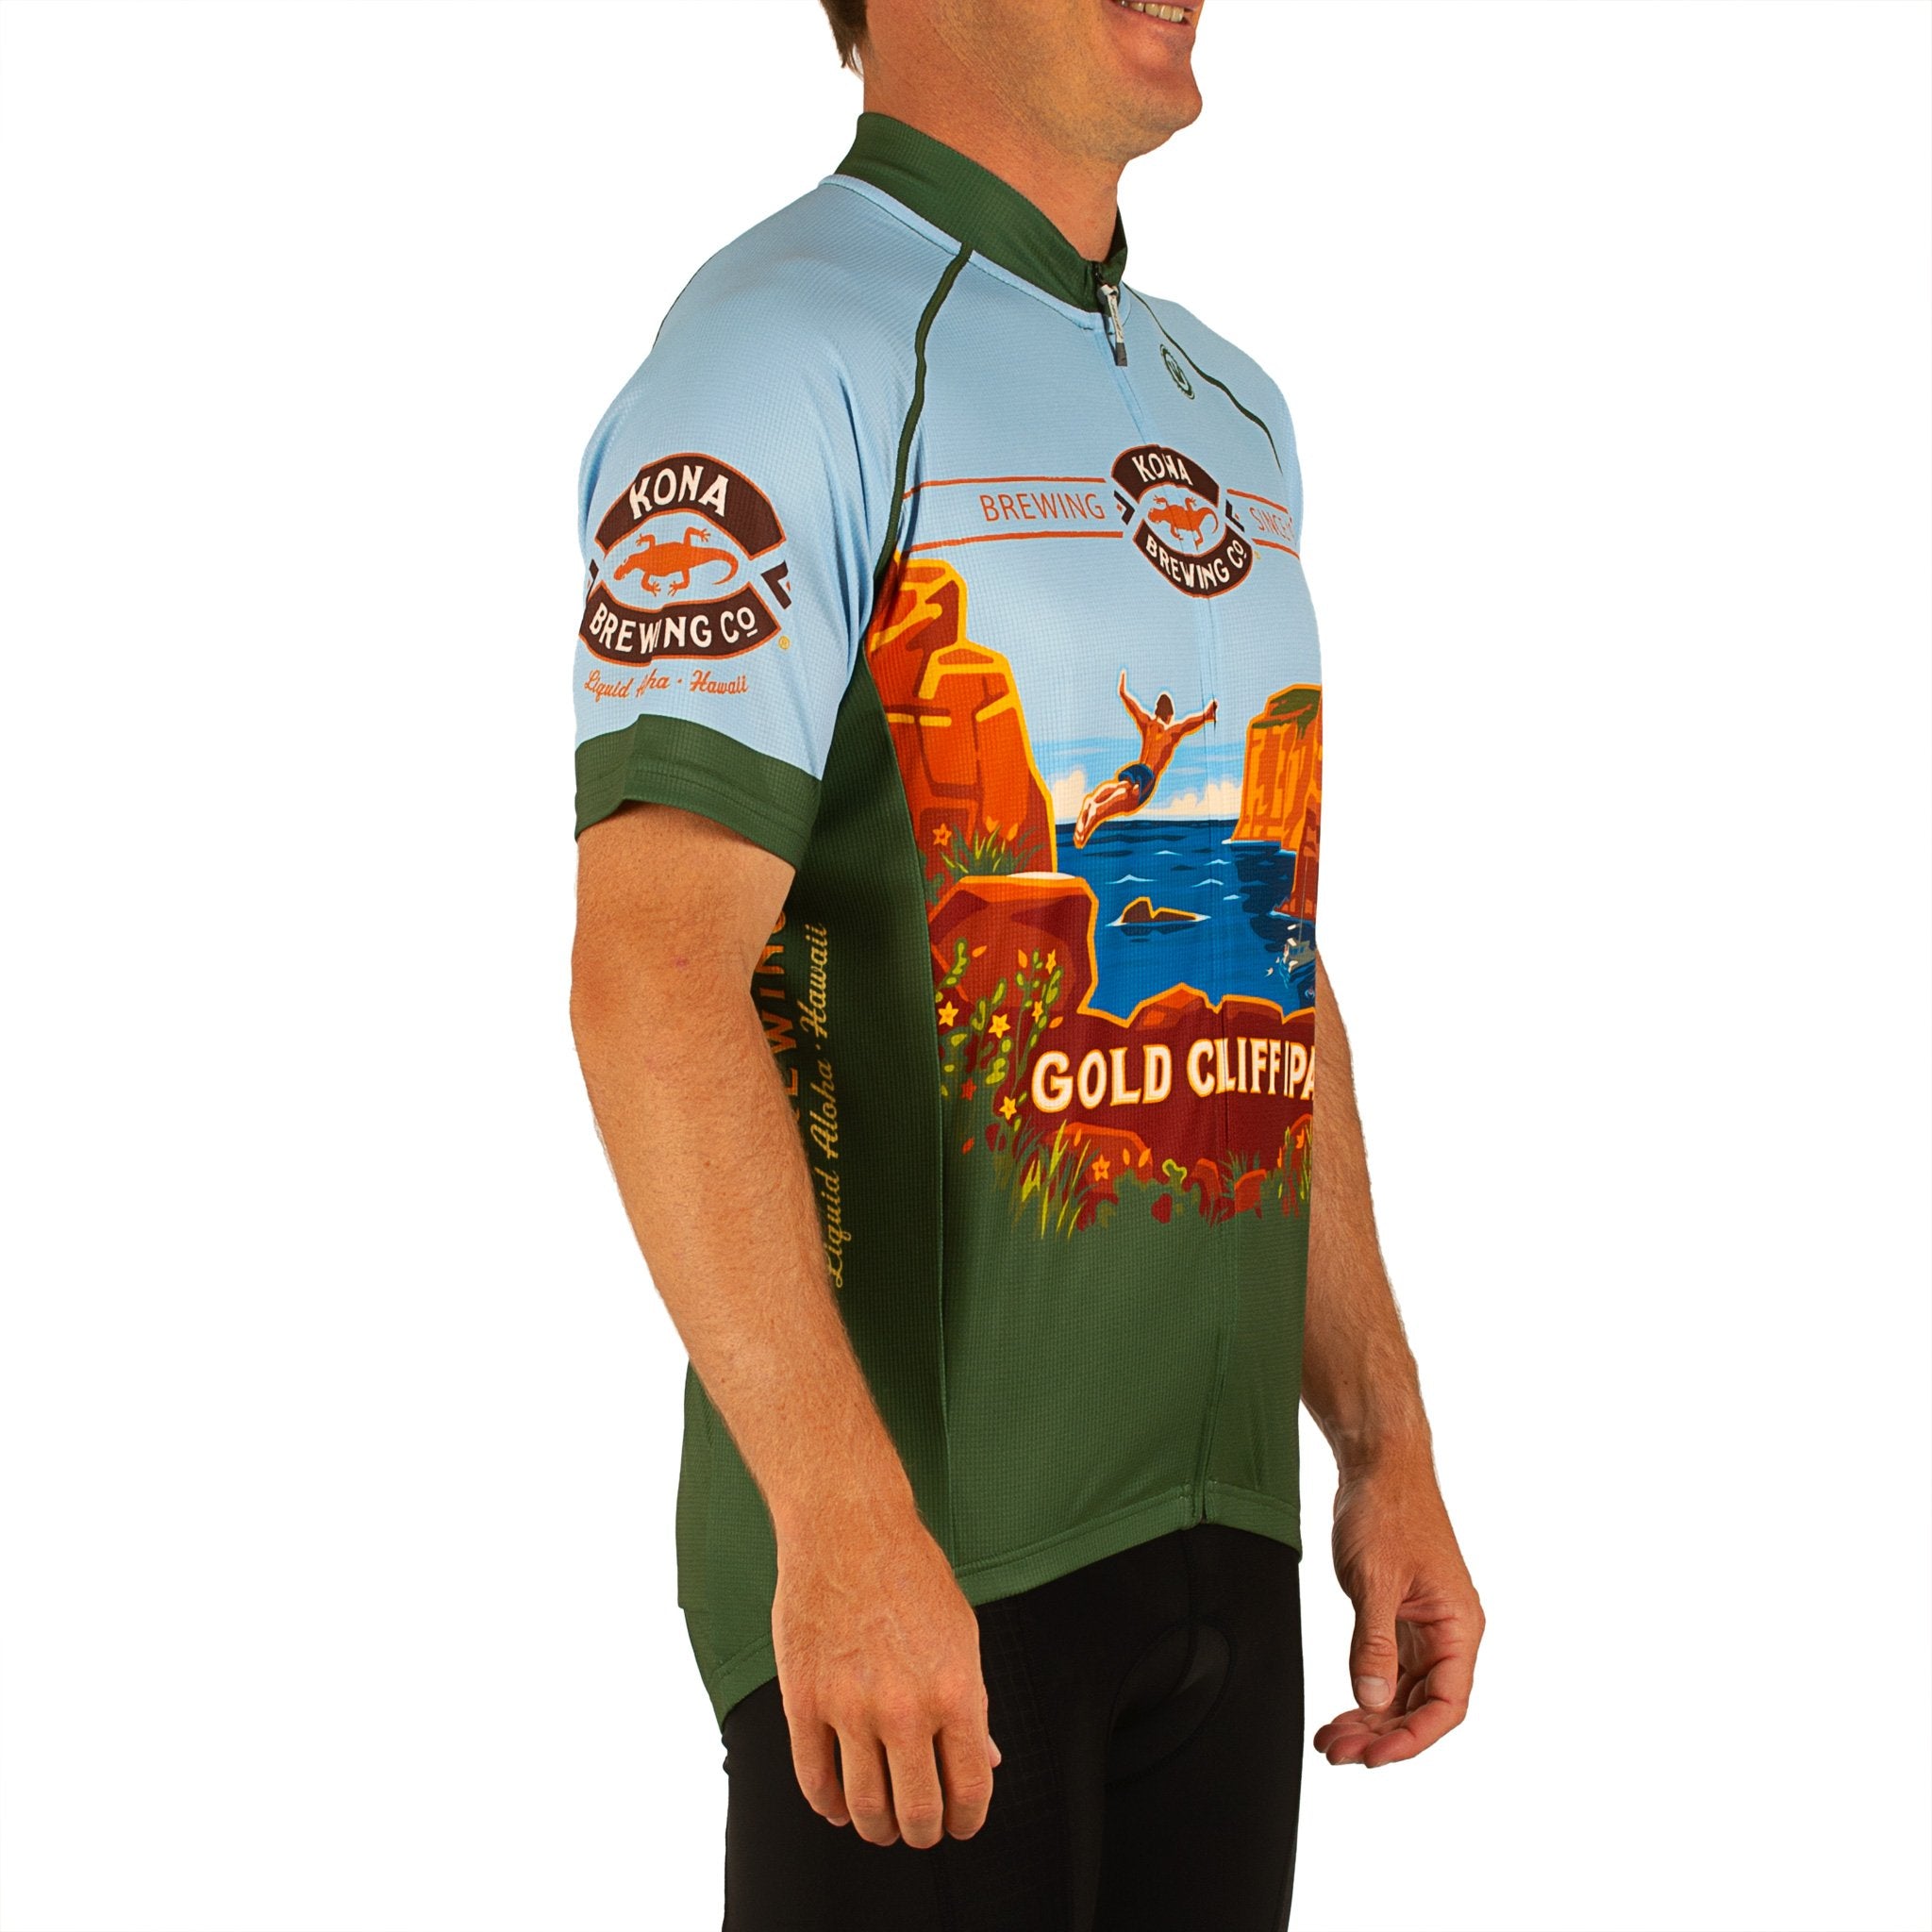 Kalas Hook Norton Brewery Short Sleeve Cycling Jersey